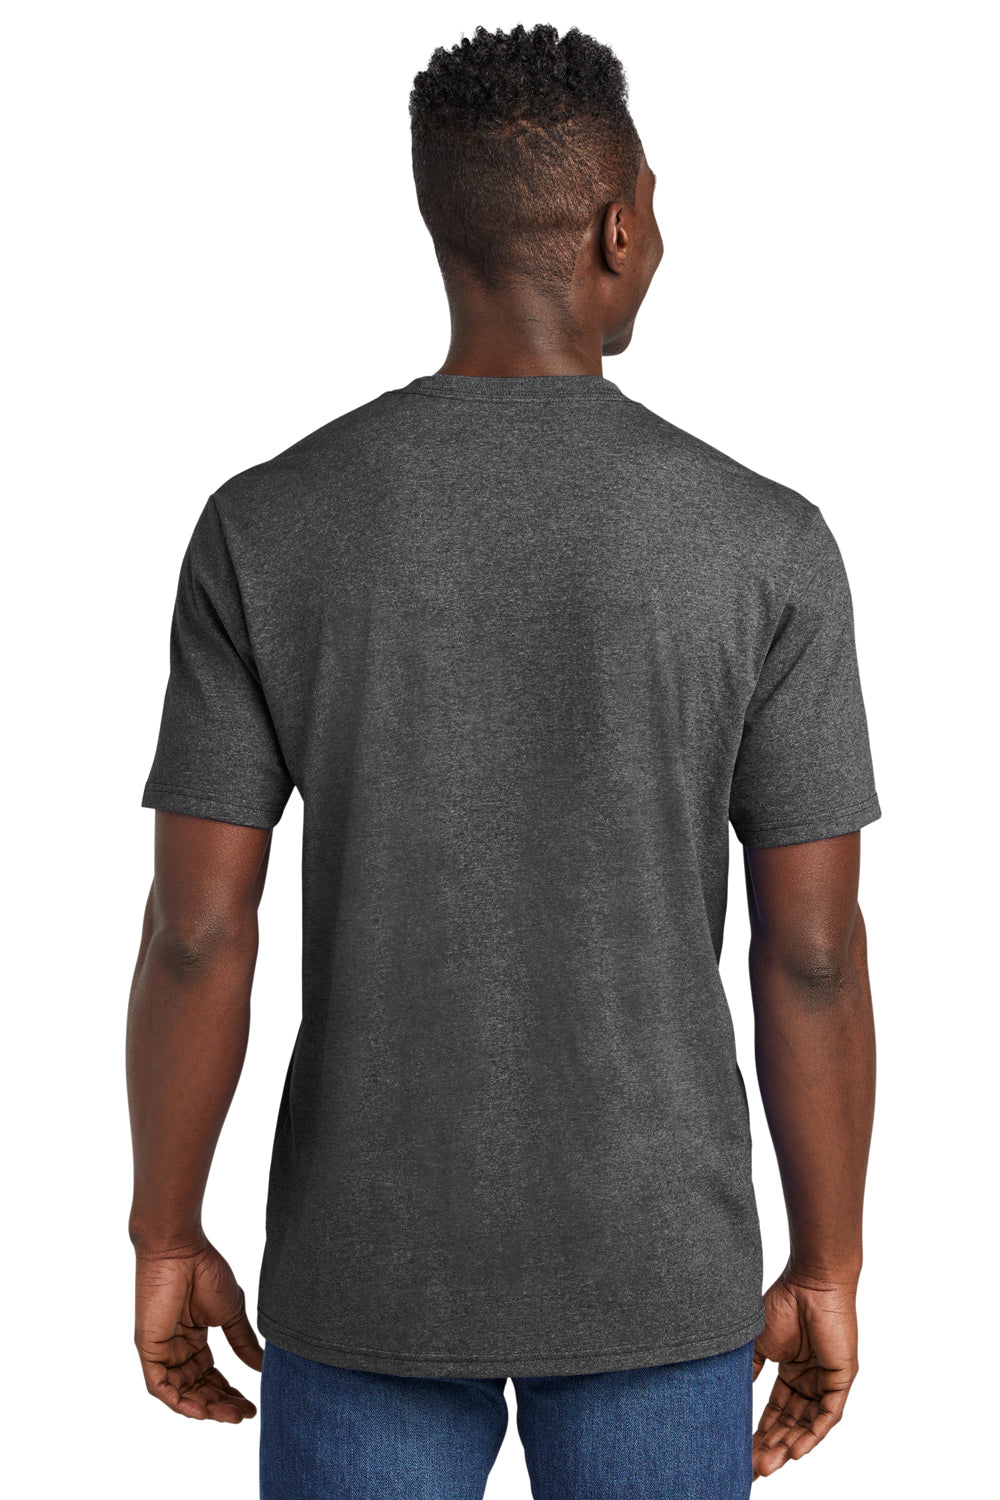 Allmade AL2300 Mens Recycled Short Sleeve Crewneck T-Shirt Heather Charcoal Grey Model Back